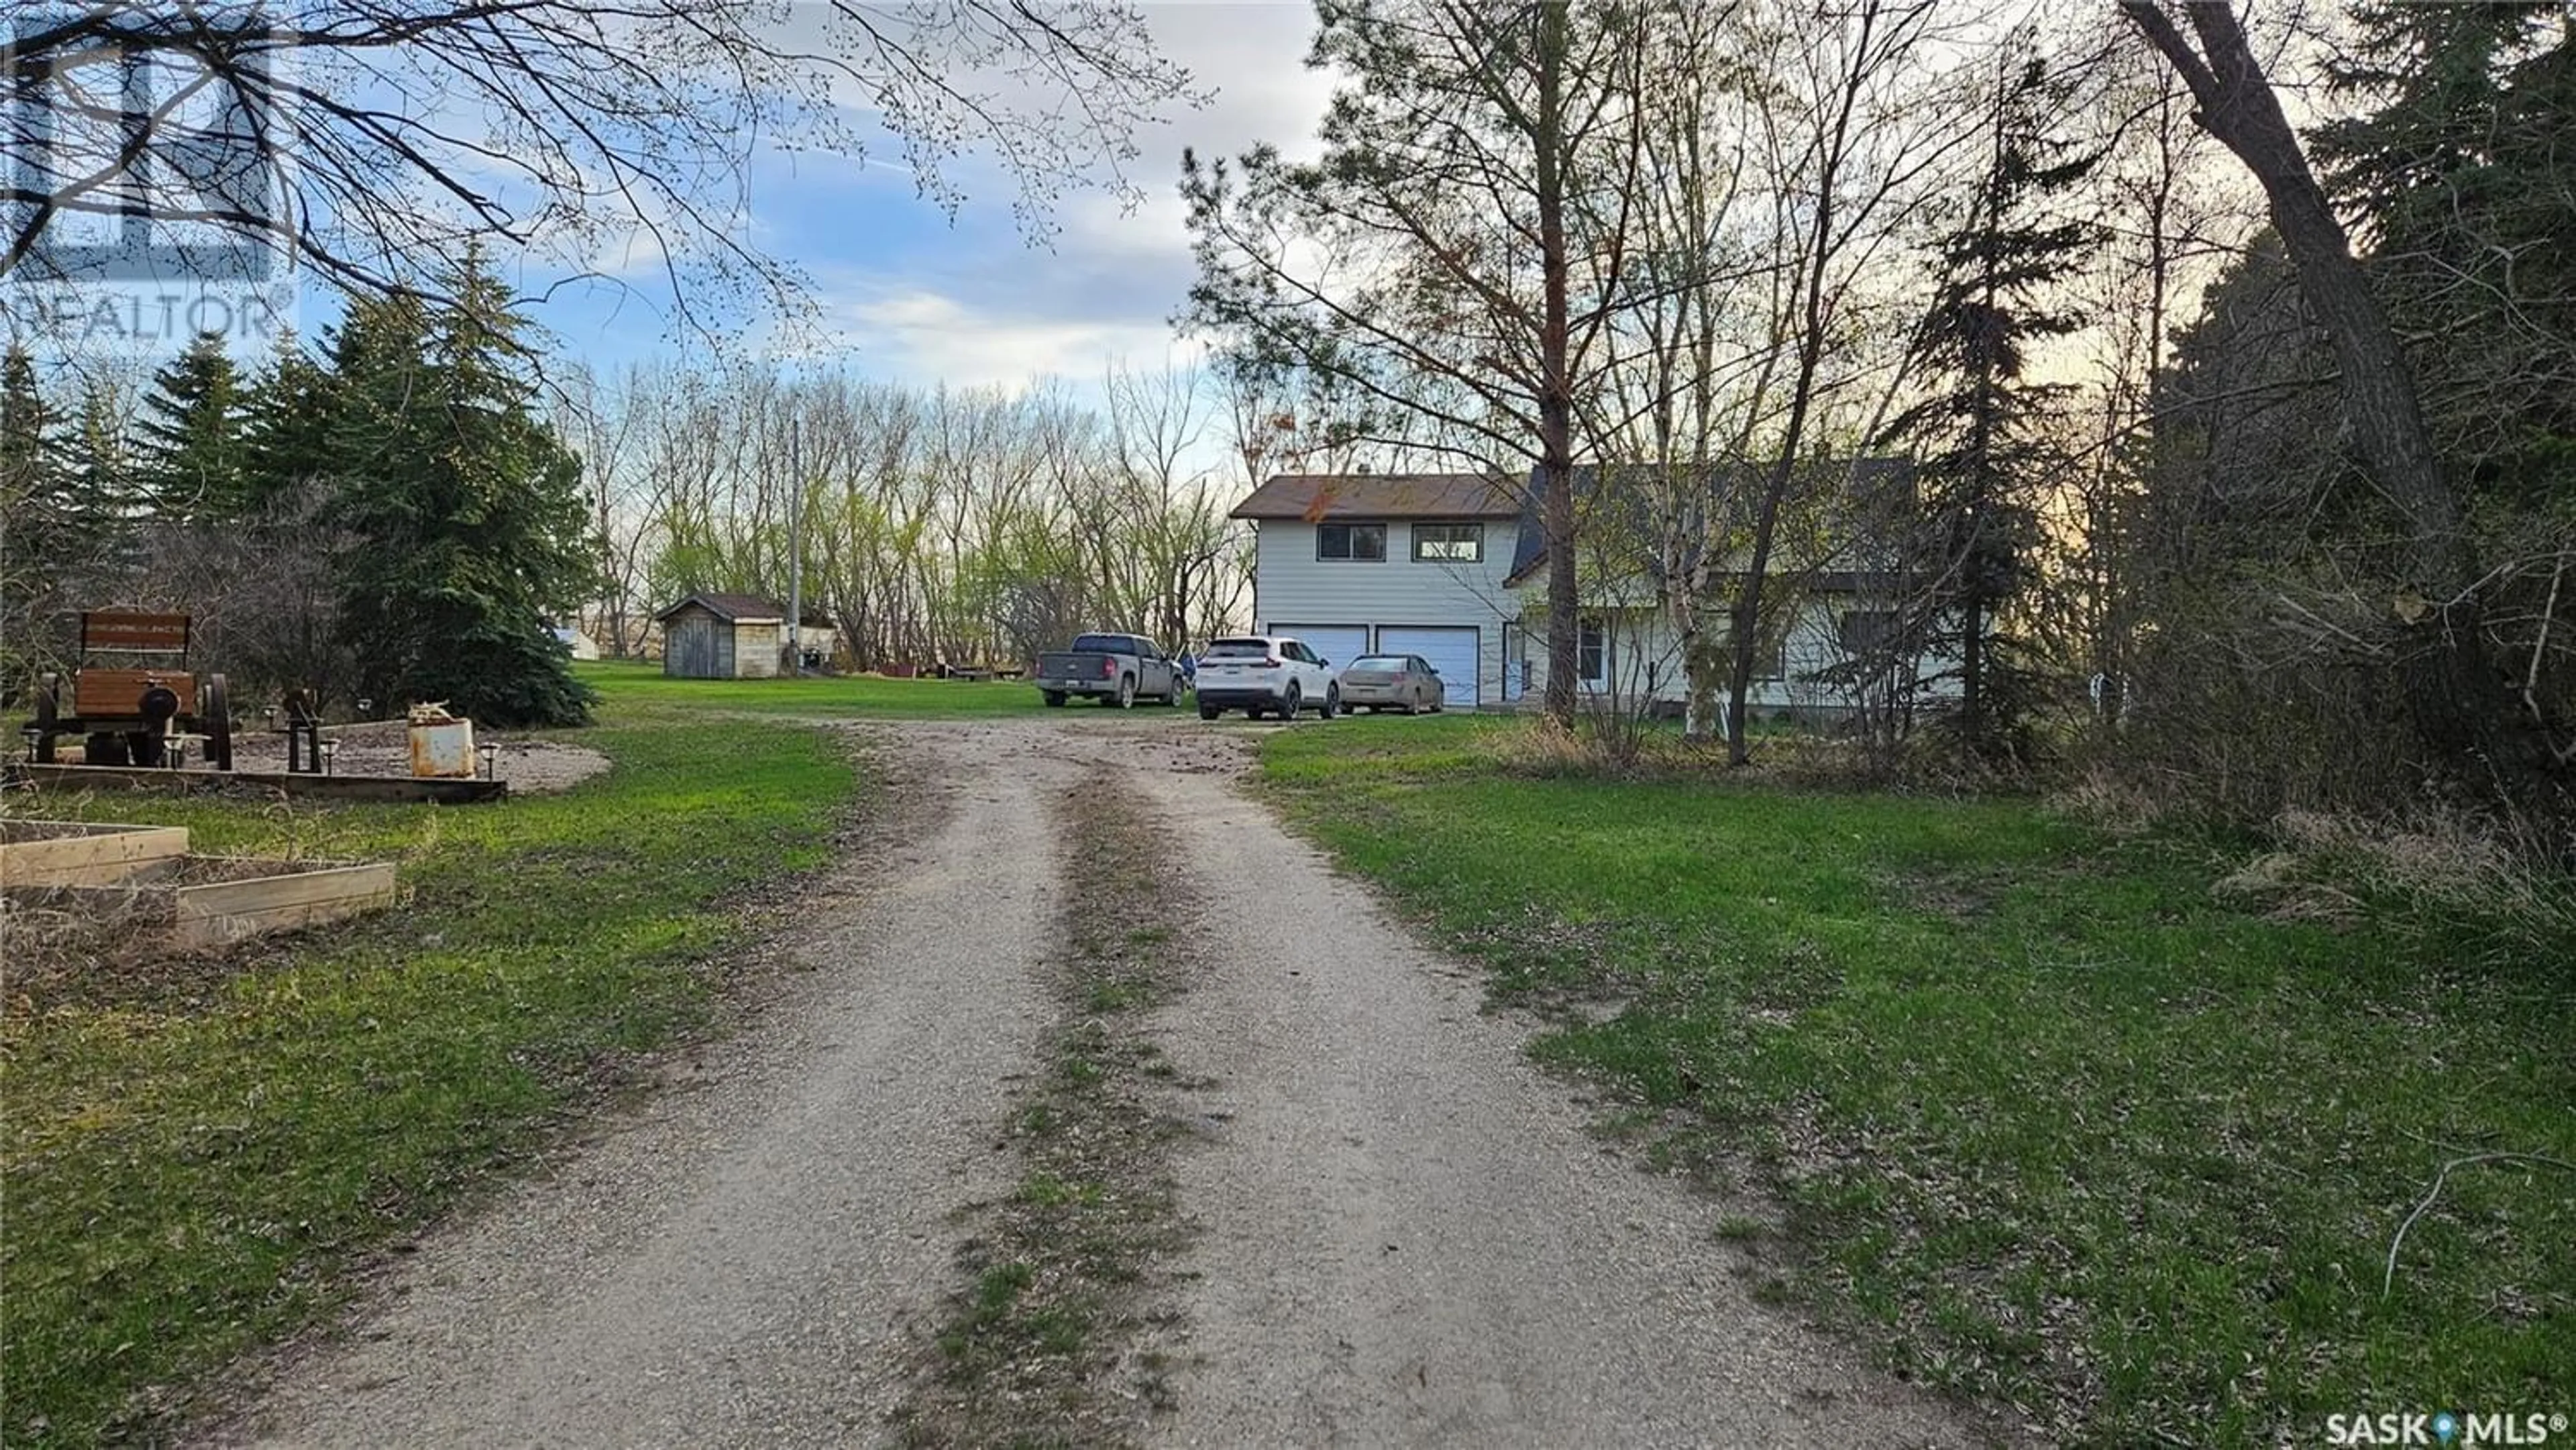 Street view for Humboldt Acreage, Humboldt Rm No. 370 Saskatchewan S0K2A0